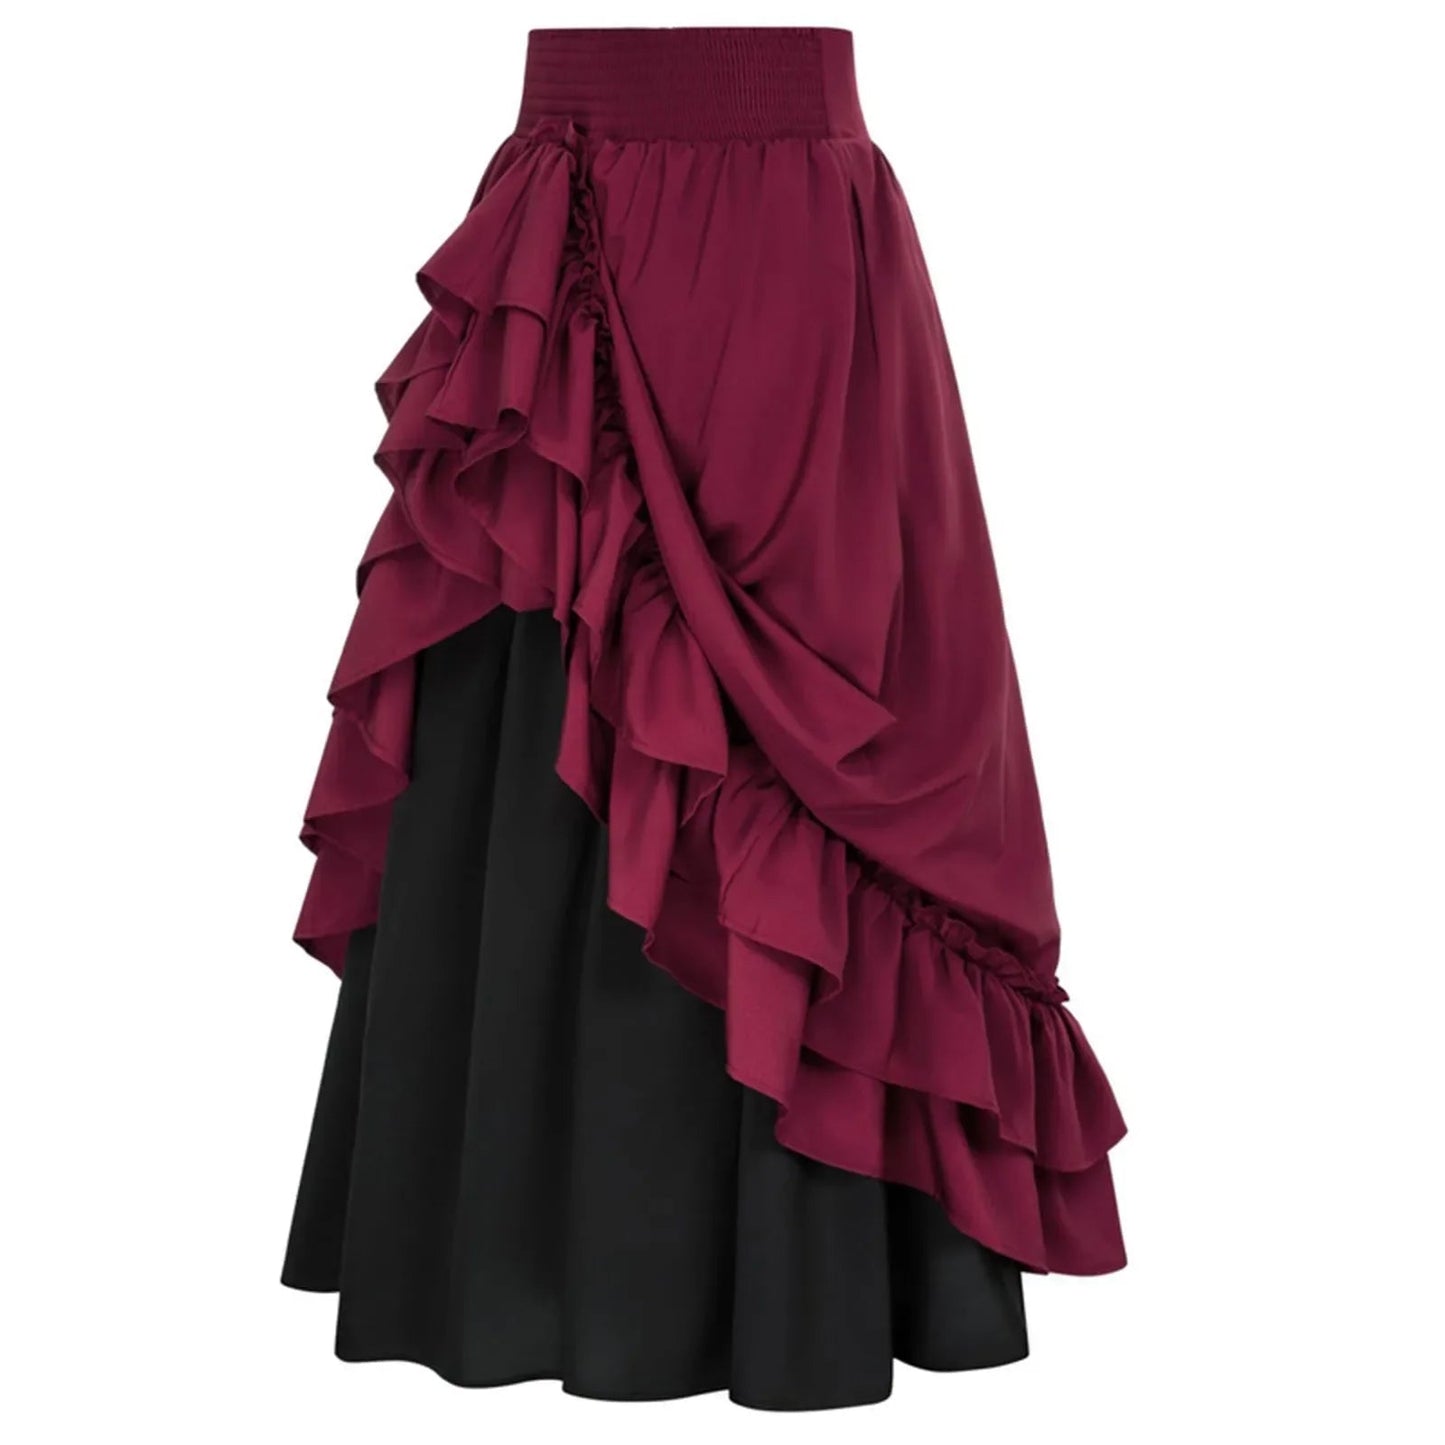 Ruffled Skirt Renaissance